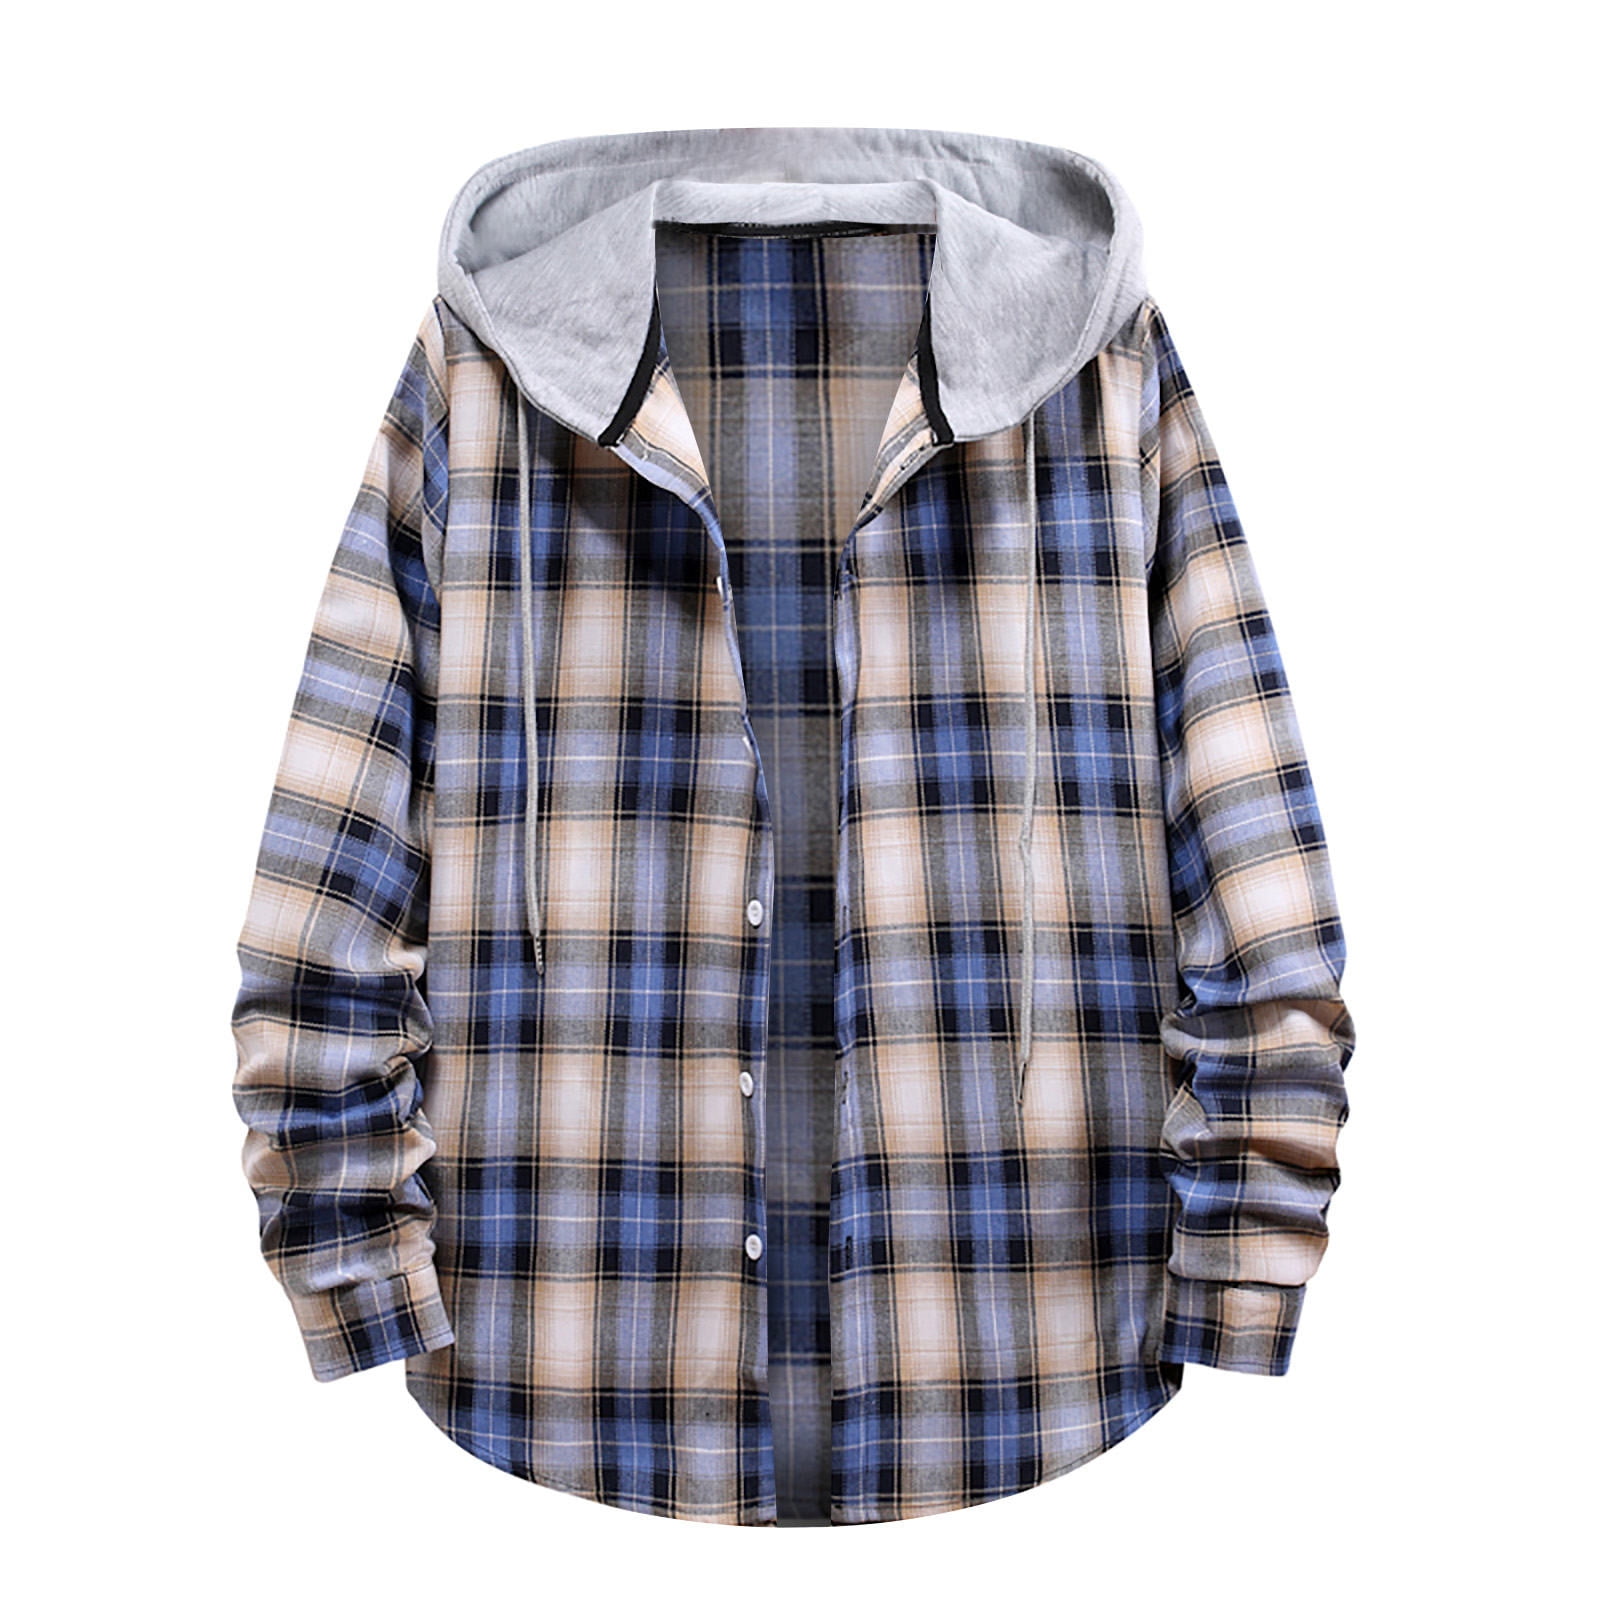 Men's Fall Winter Plaid Shirts Jacket Fleece Lined Flannel Shirts ...